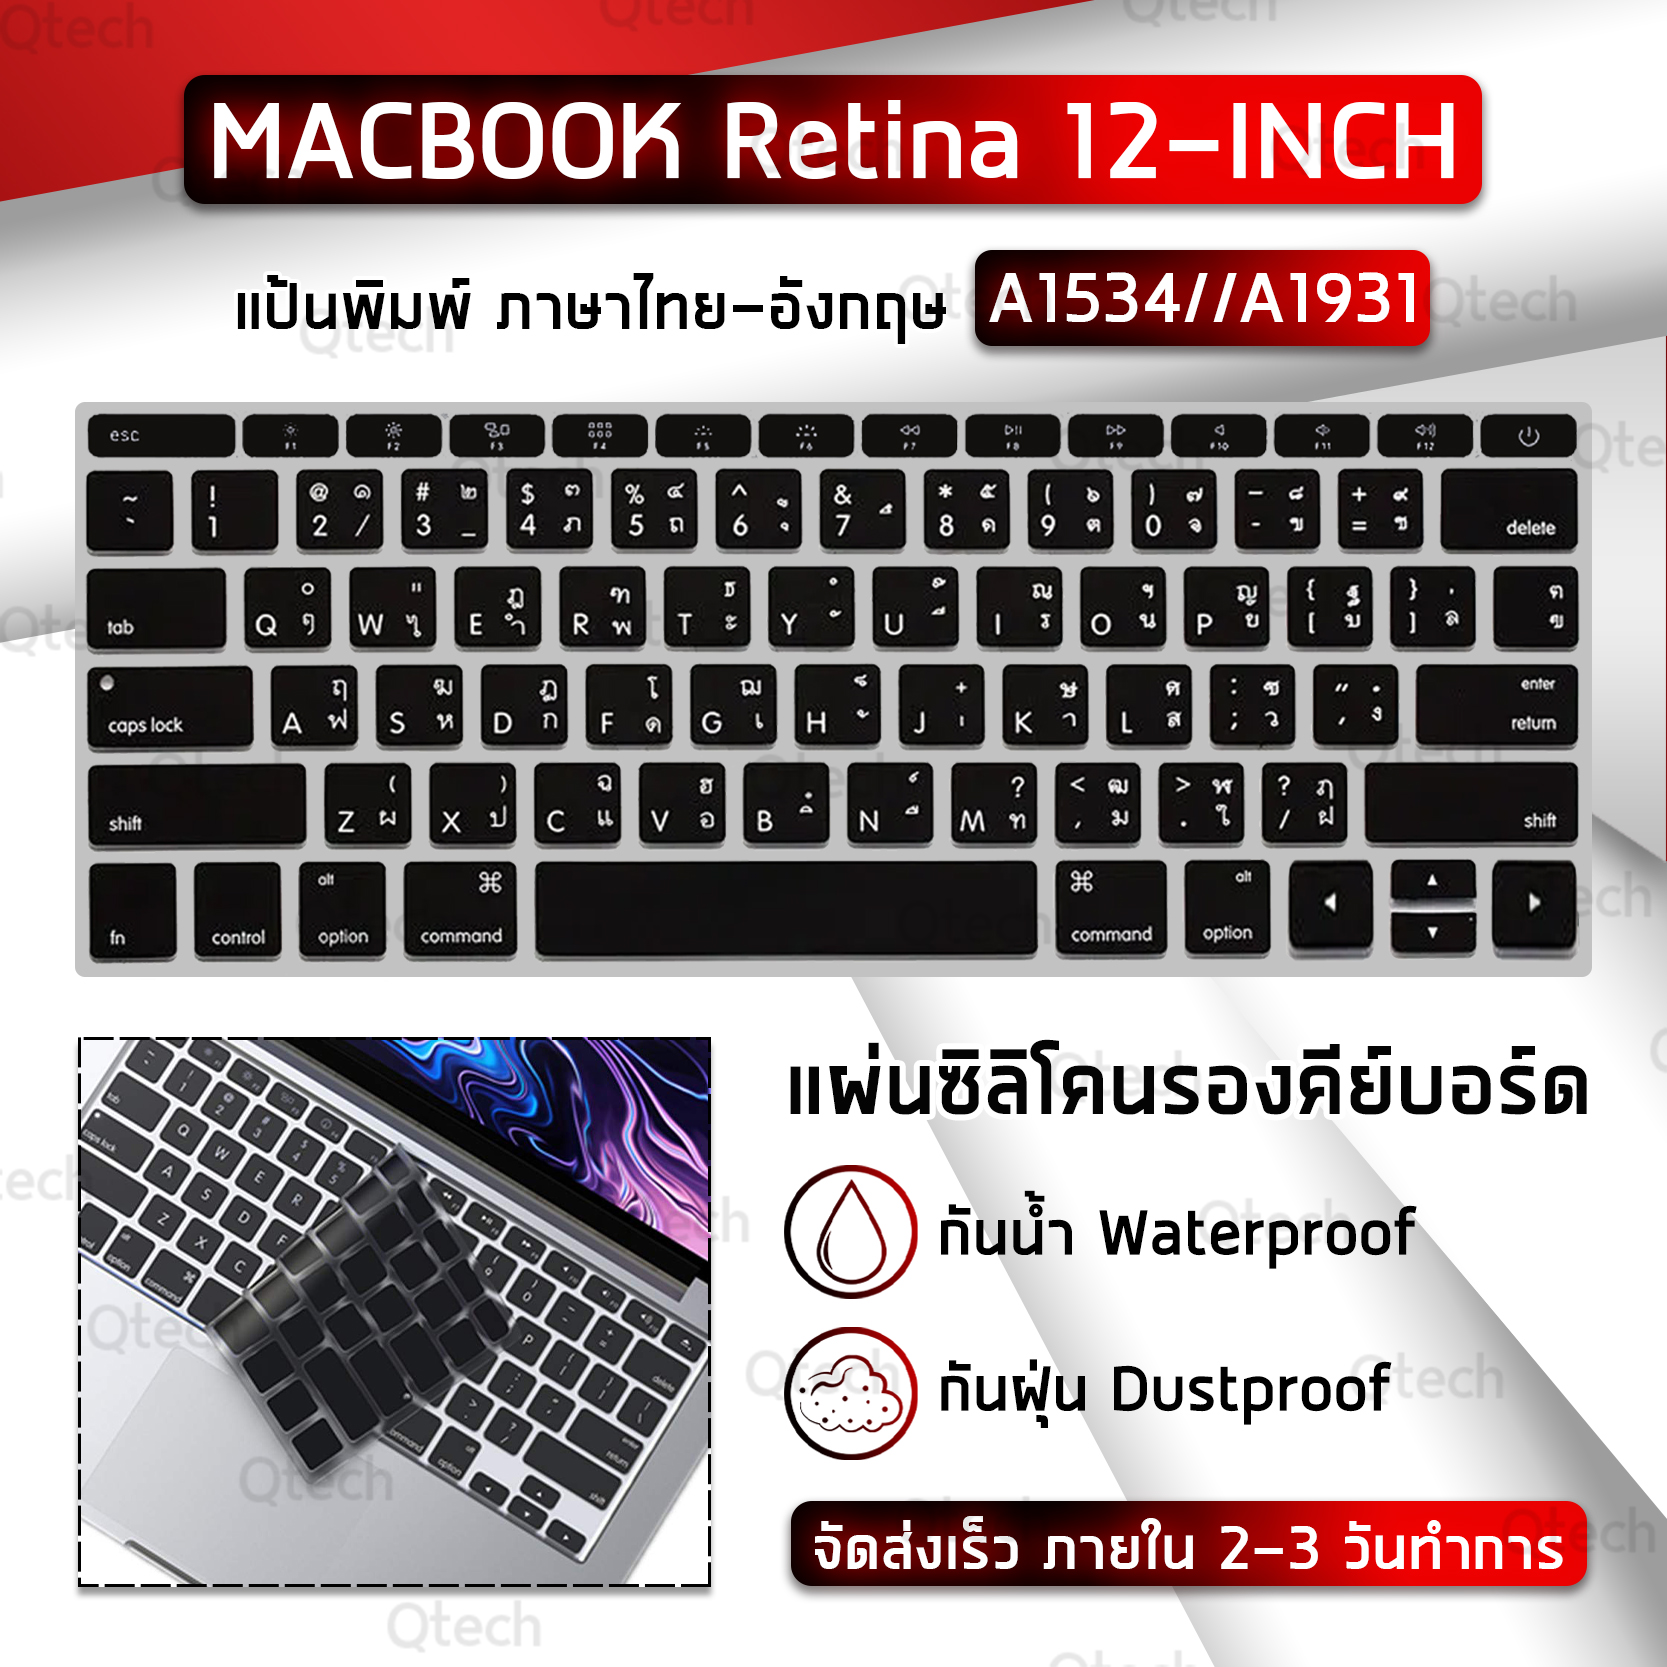 Qtech - แผ่นซิลิโคน ภาษาไทย New MacBook 12 with Retina Display A1534 A1931 ซิลิโคนรอง คีย์บอร์ด กันฝุ่น - Silicone Keyboard Cover for New MacBook Without Touch Bar A1708 A1988 A1534 A1931